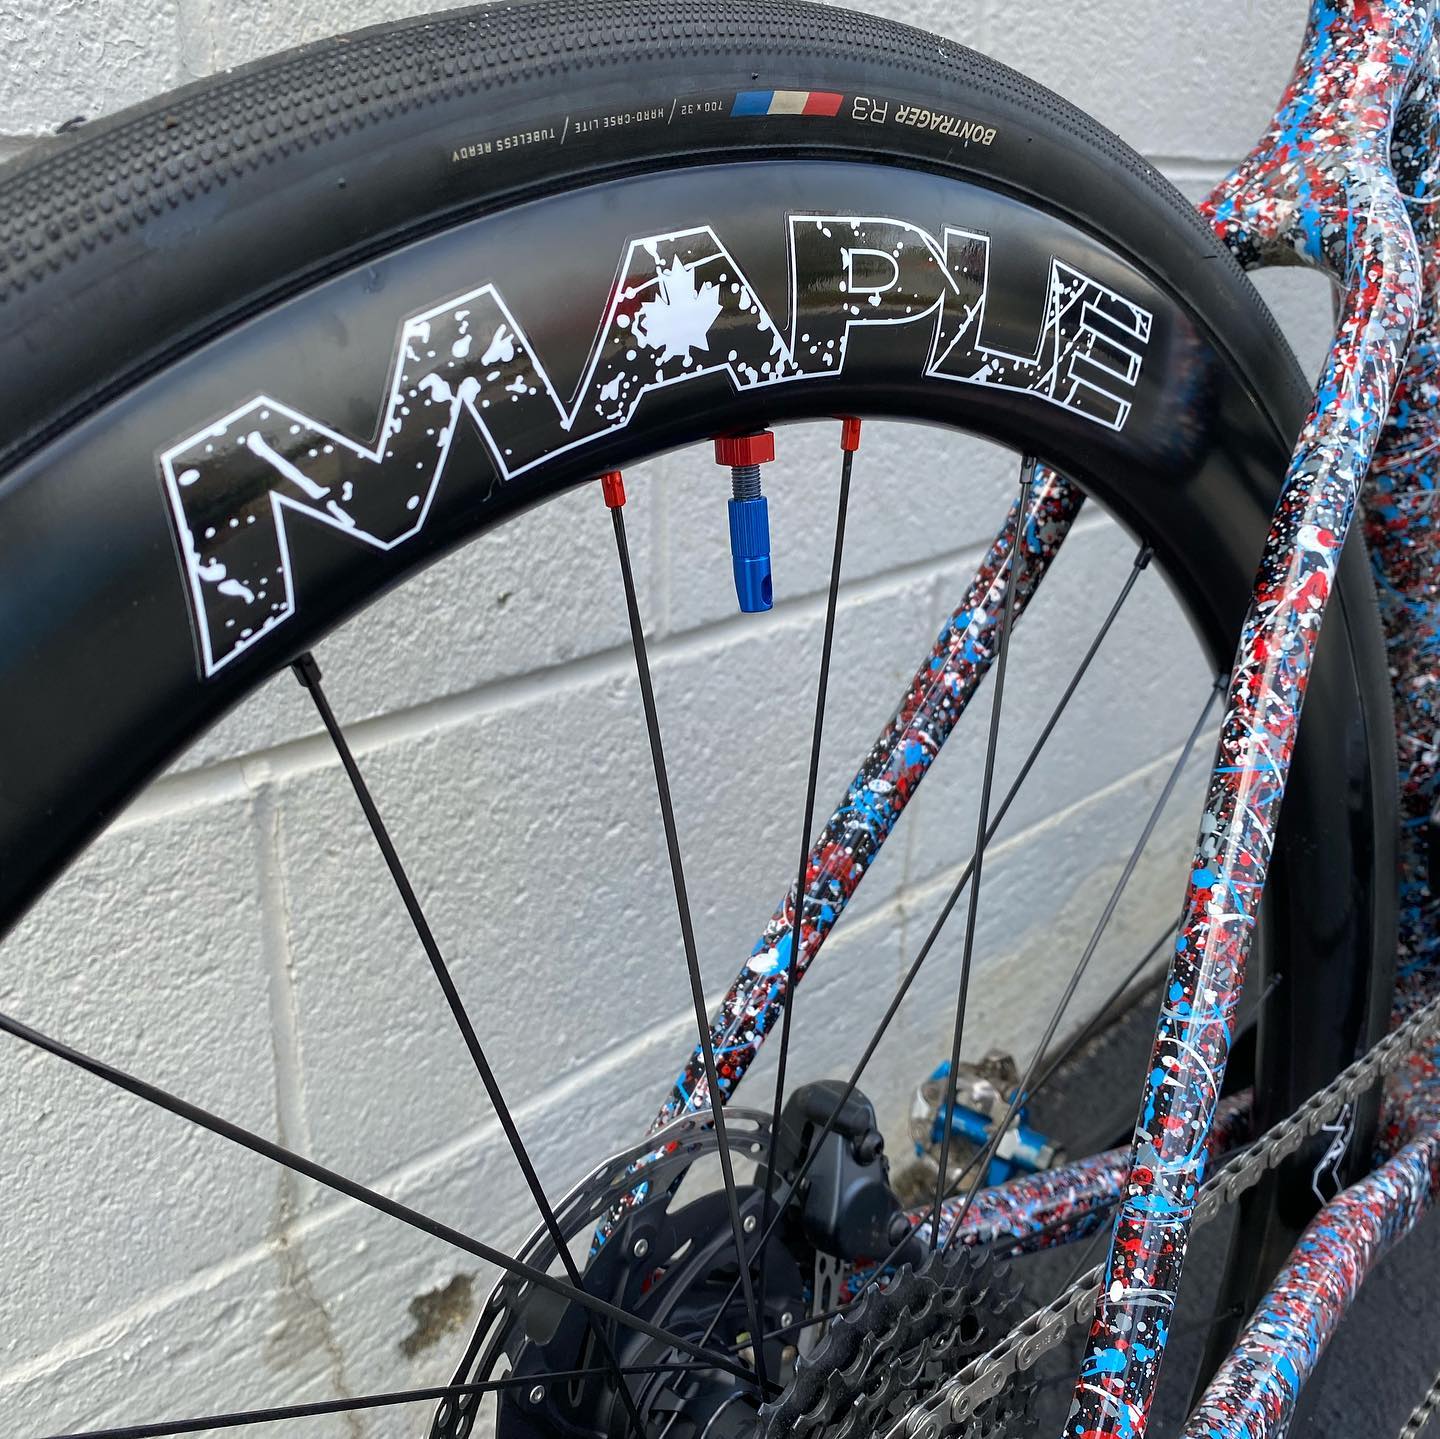 Maple RCT Wheelset - Ride Maple